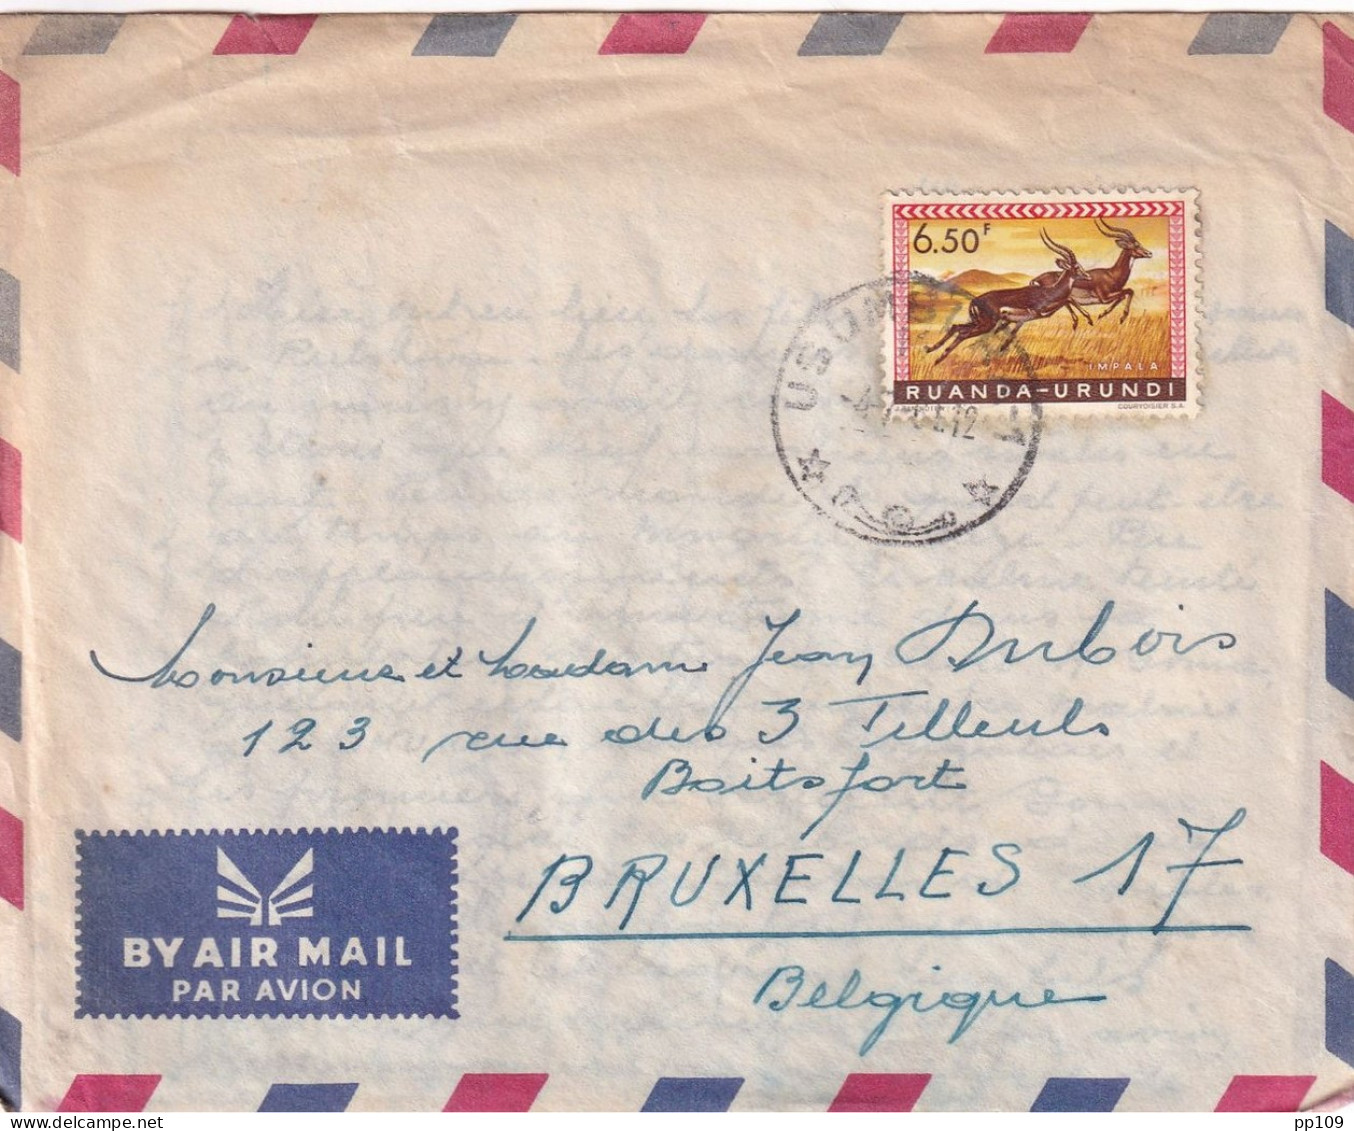 RUANDA URUNDI   TP Impala  Obl USUMBURA 4 VII 56  /L Par Avion By Air Mail Vers Boitsfort  Dubois  + Contenu - Lettres & Documents